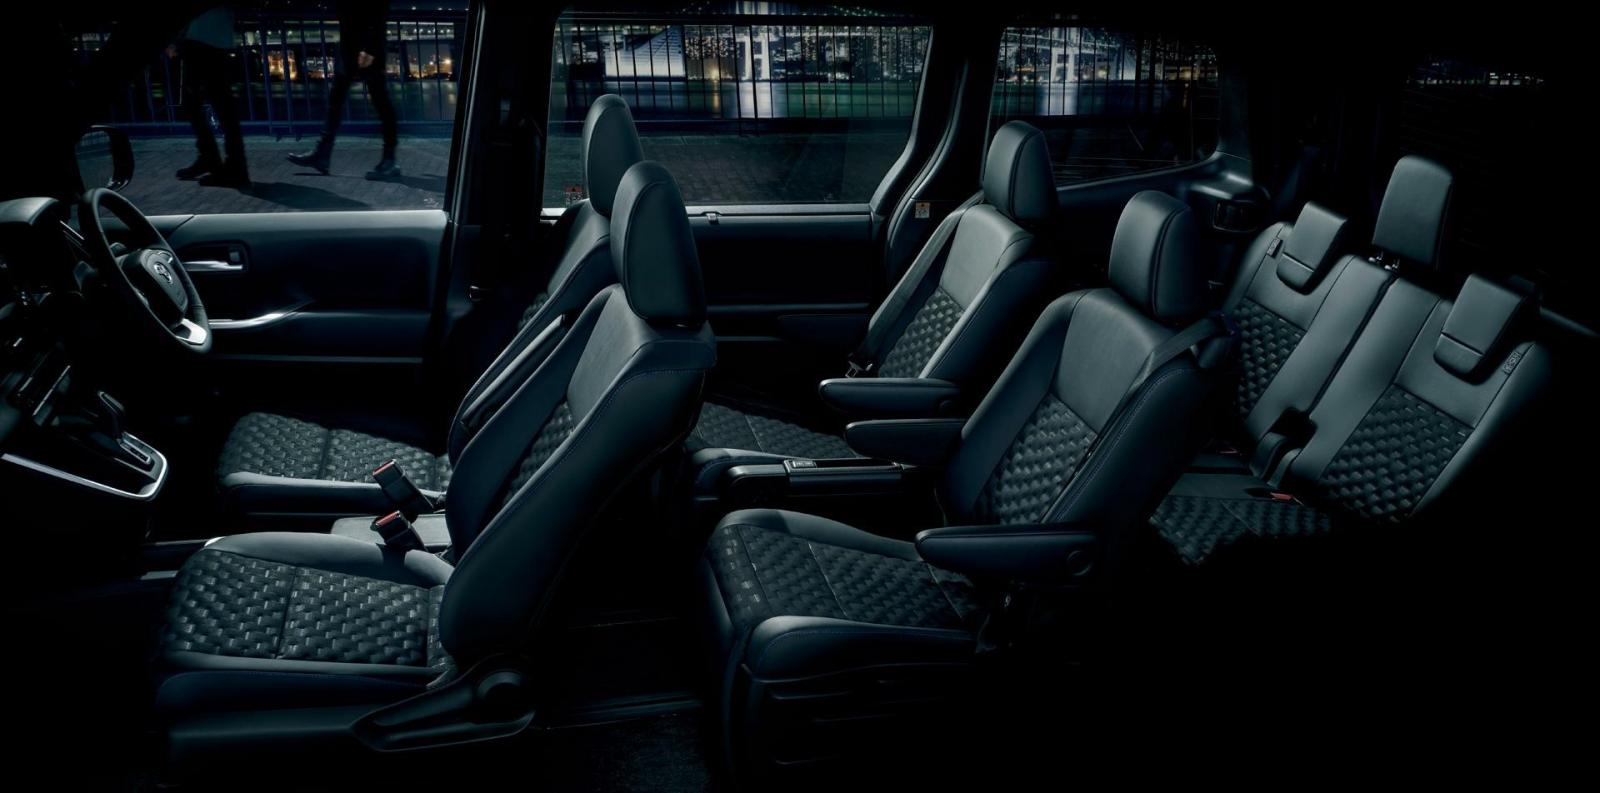 Kabin Toyota Voxy 2022 dilengkapi captain seat untuk memanjakan penumpang kursi tengah